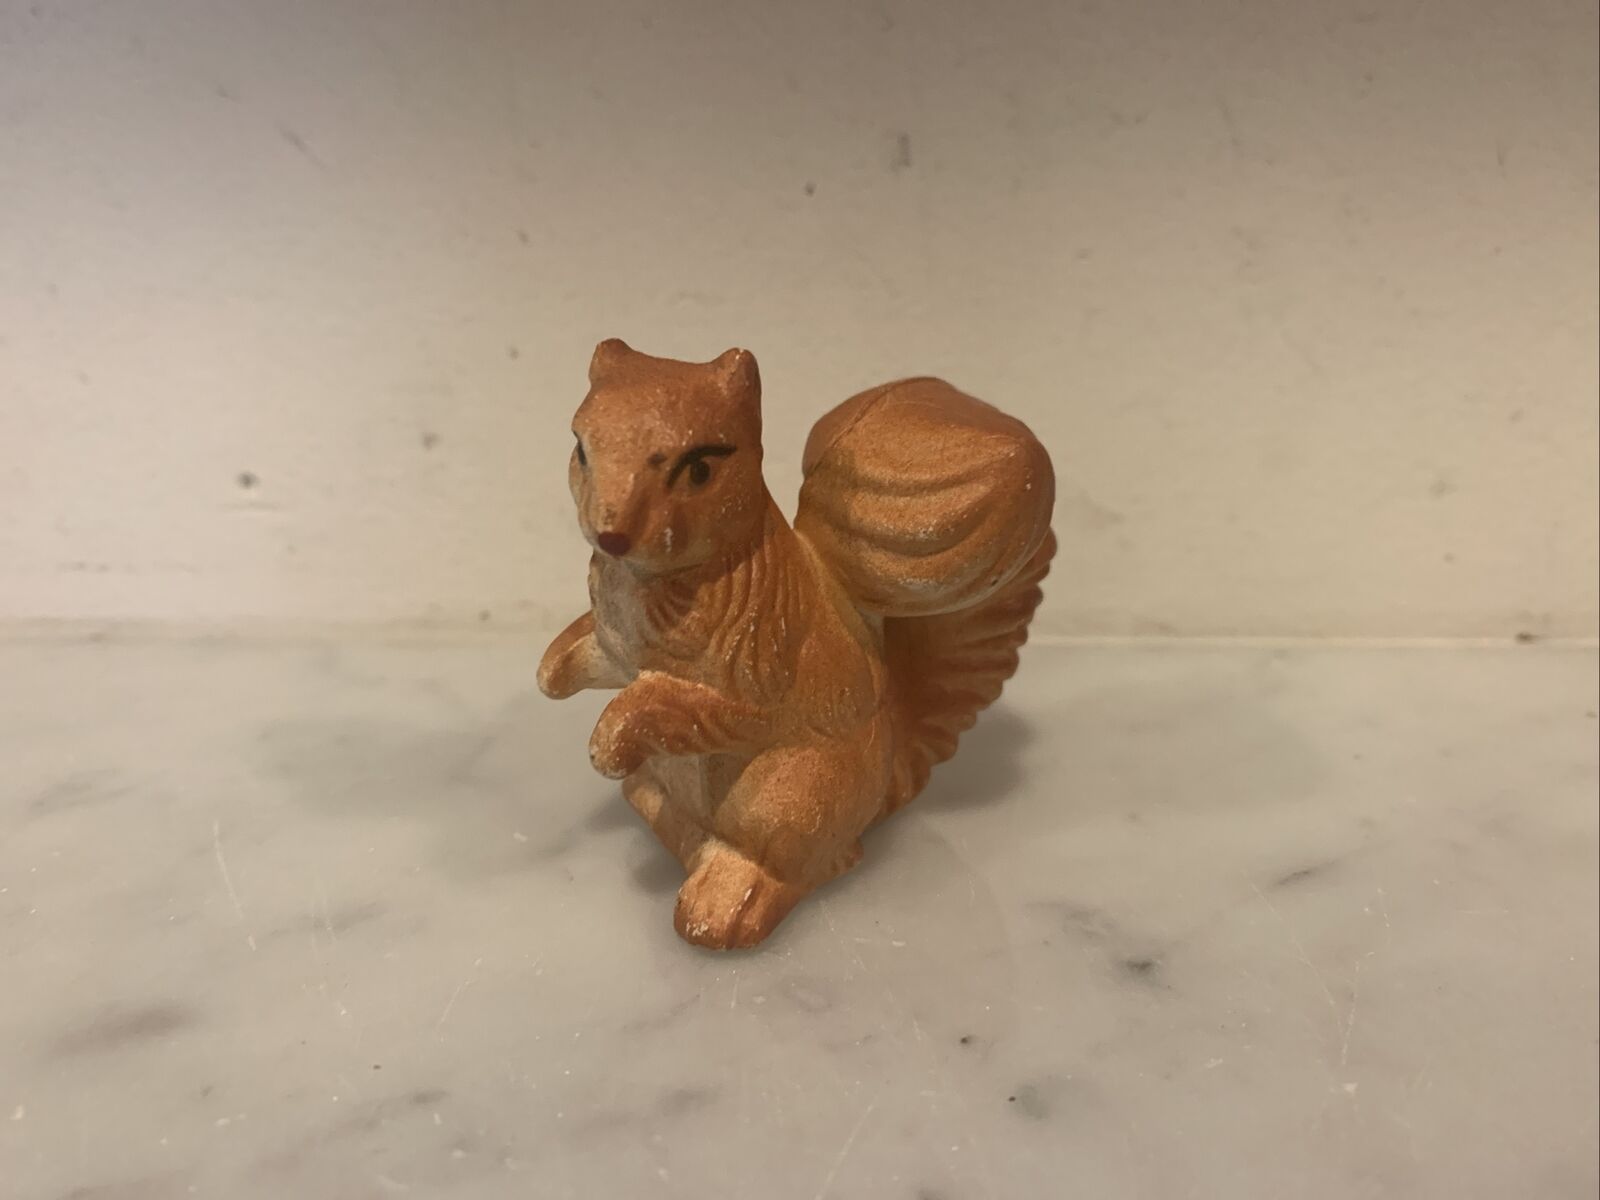 Squirrel Figurine 1.75” Tall